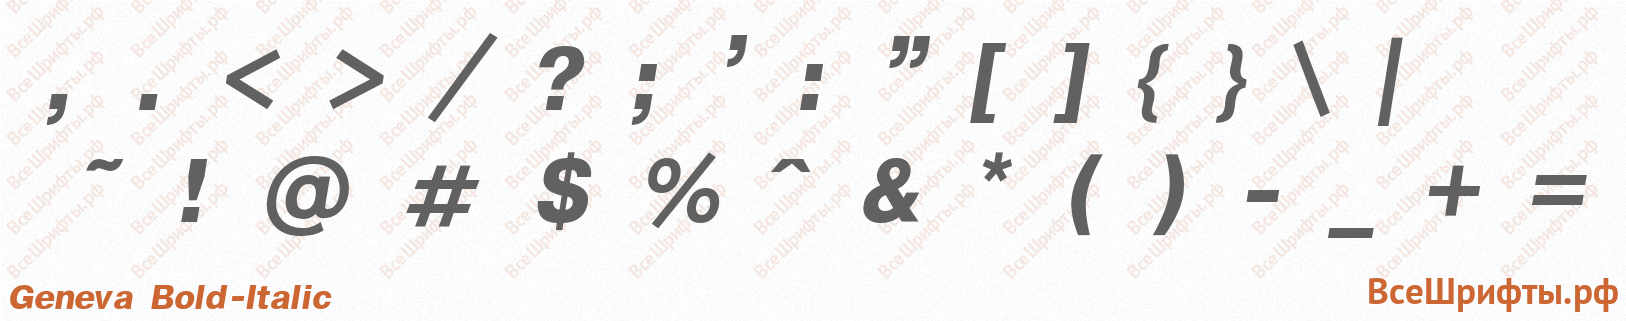 Шрифт Geneva Bold-Italic со знаками препинания и пунктуации